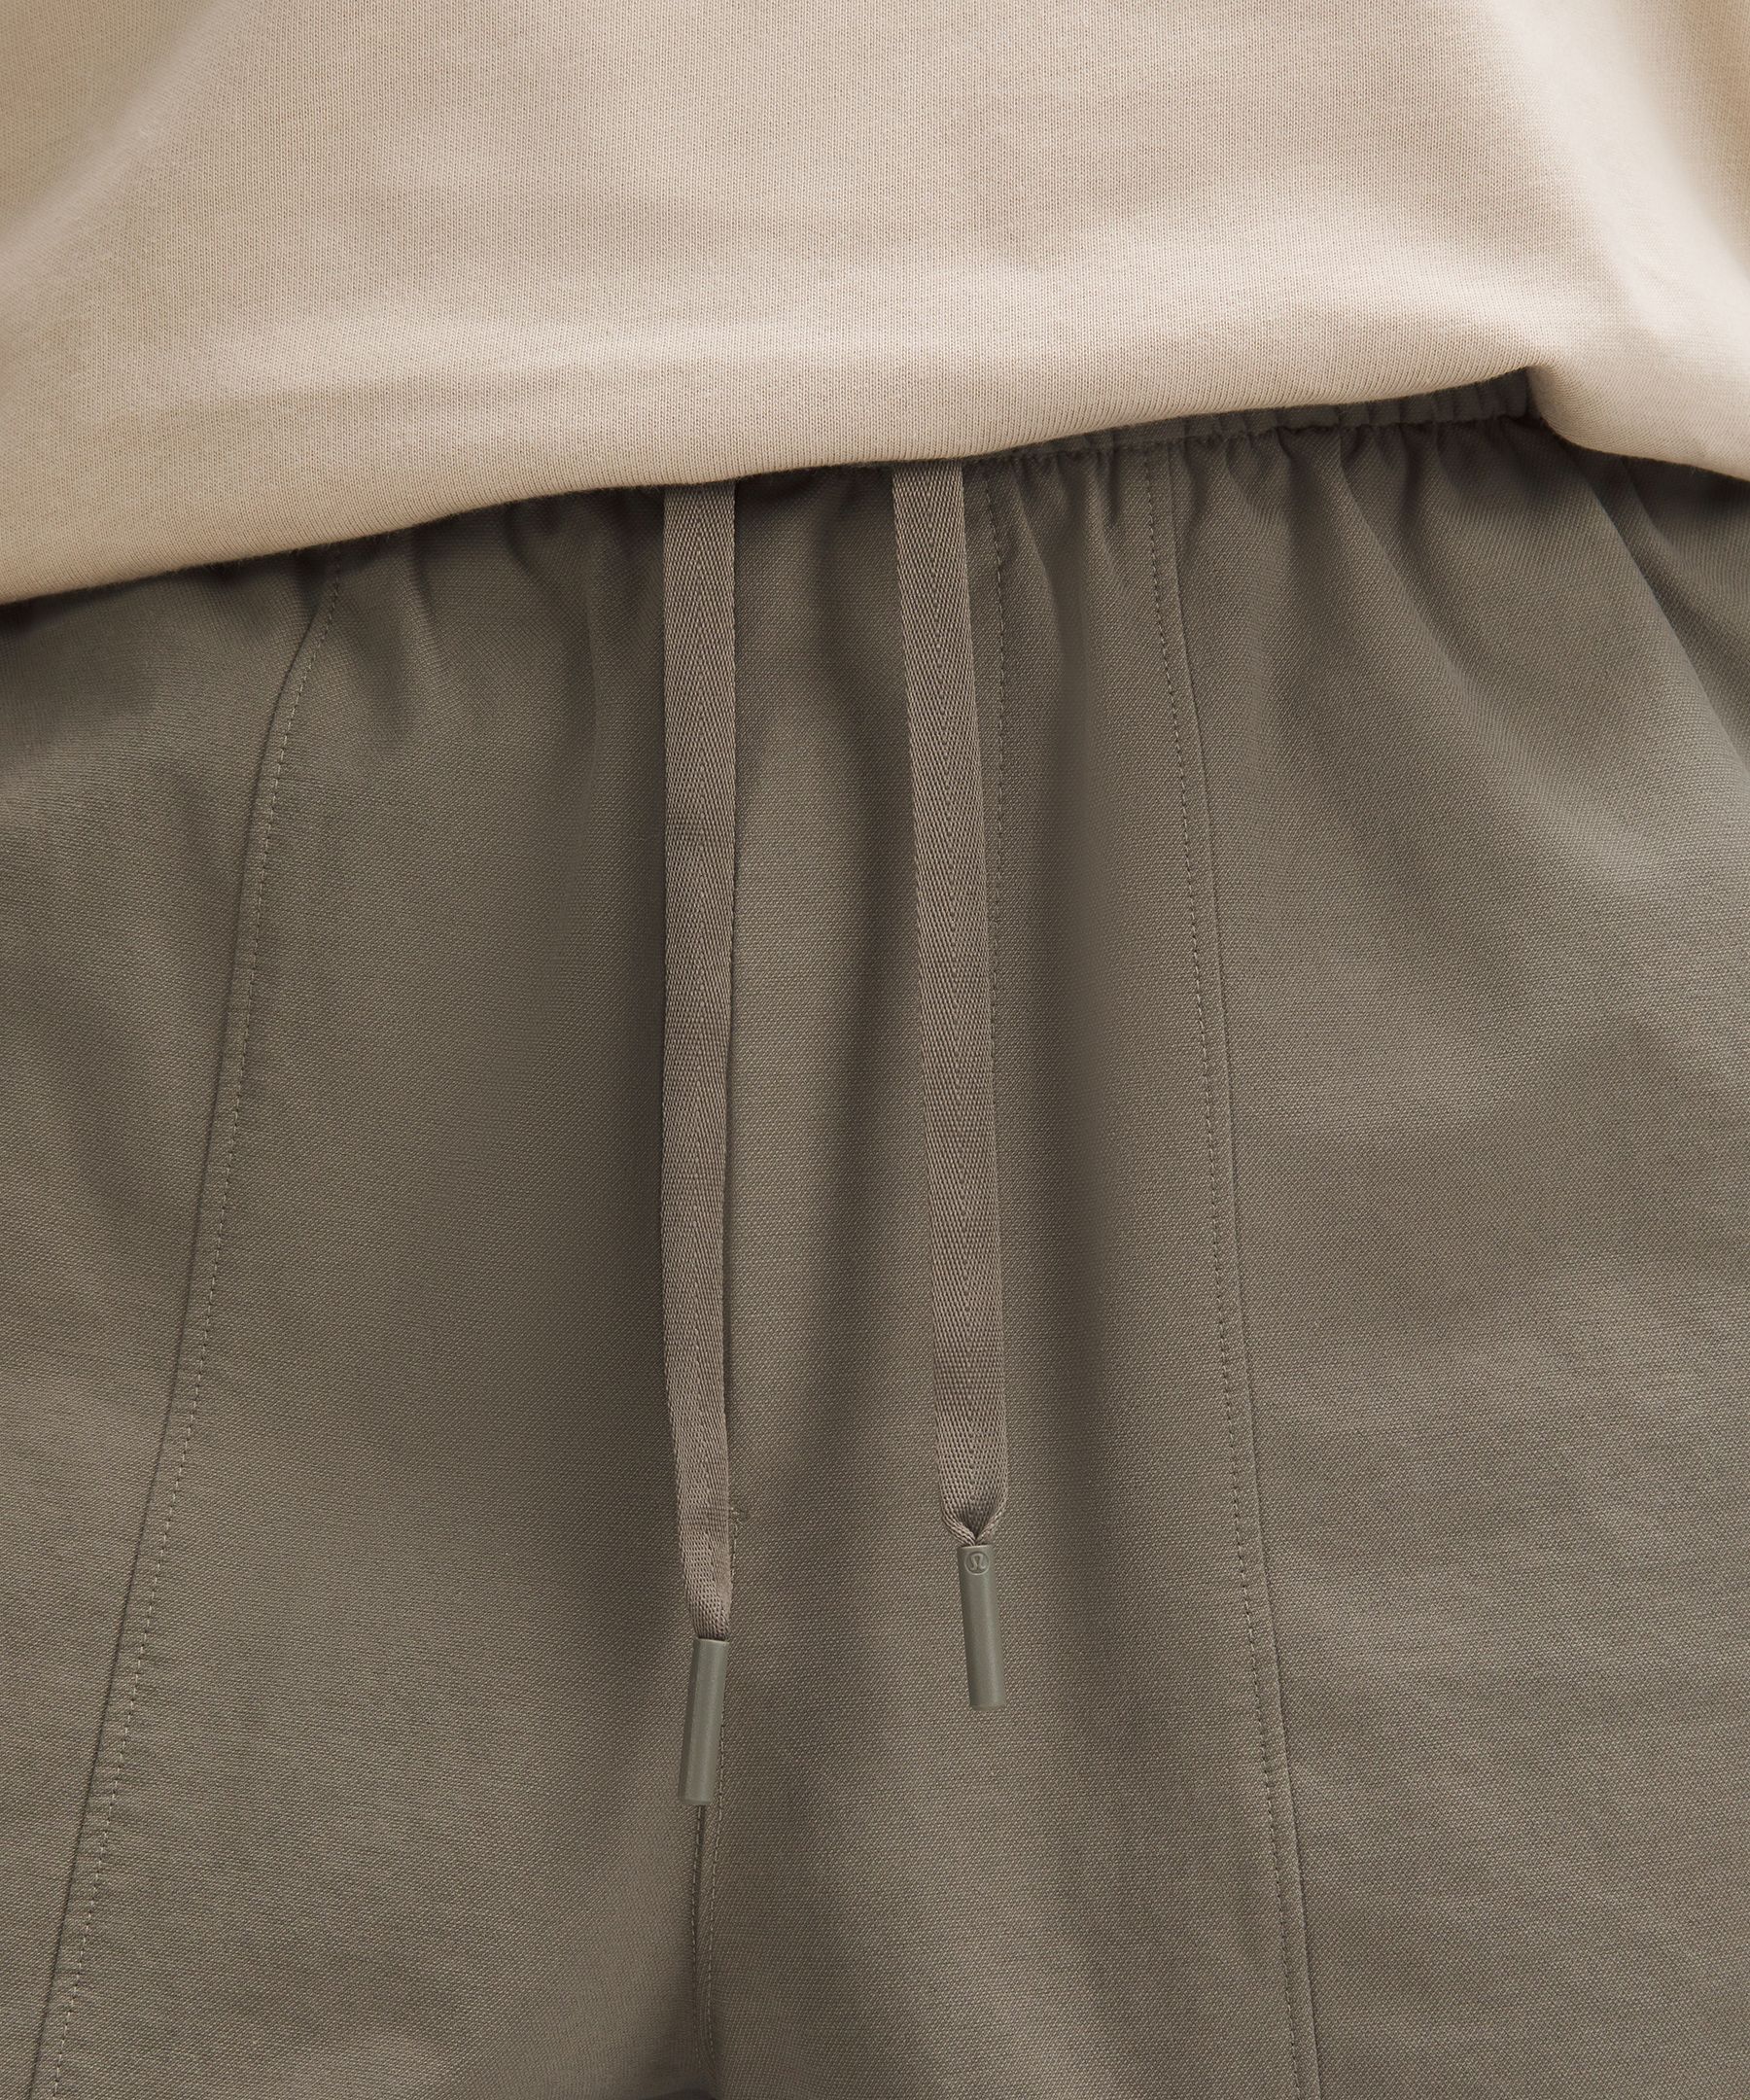 Shop Lululemon Bowline Shorts 8" Stretch Cotton Versatwill